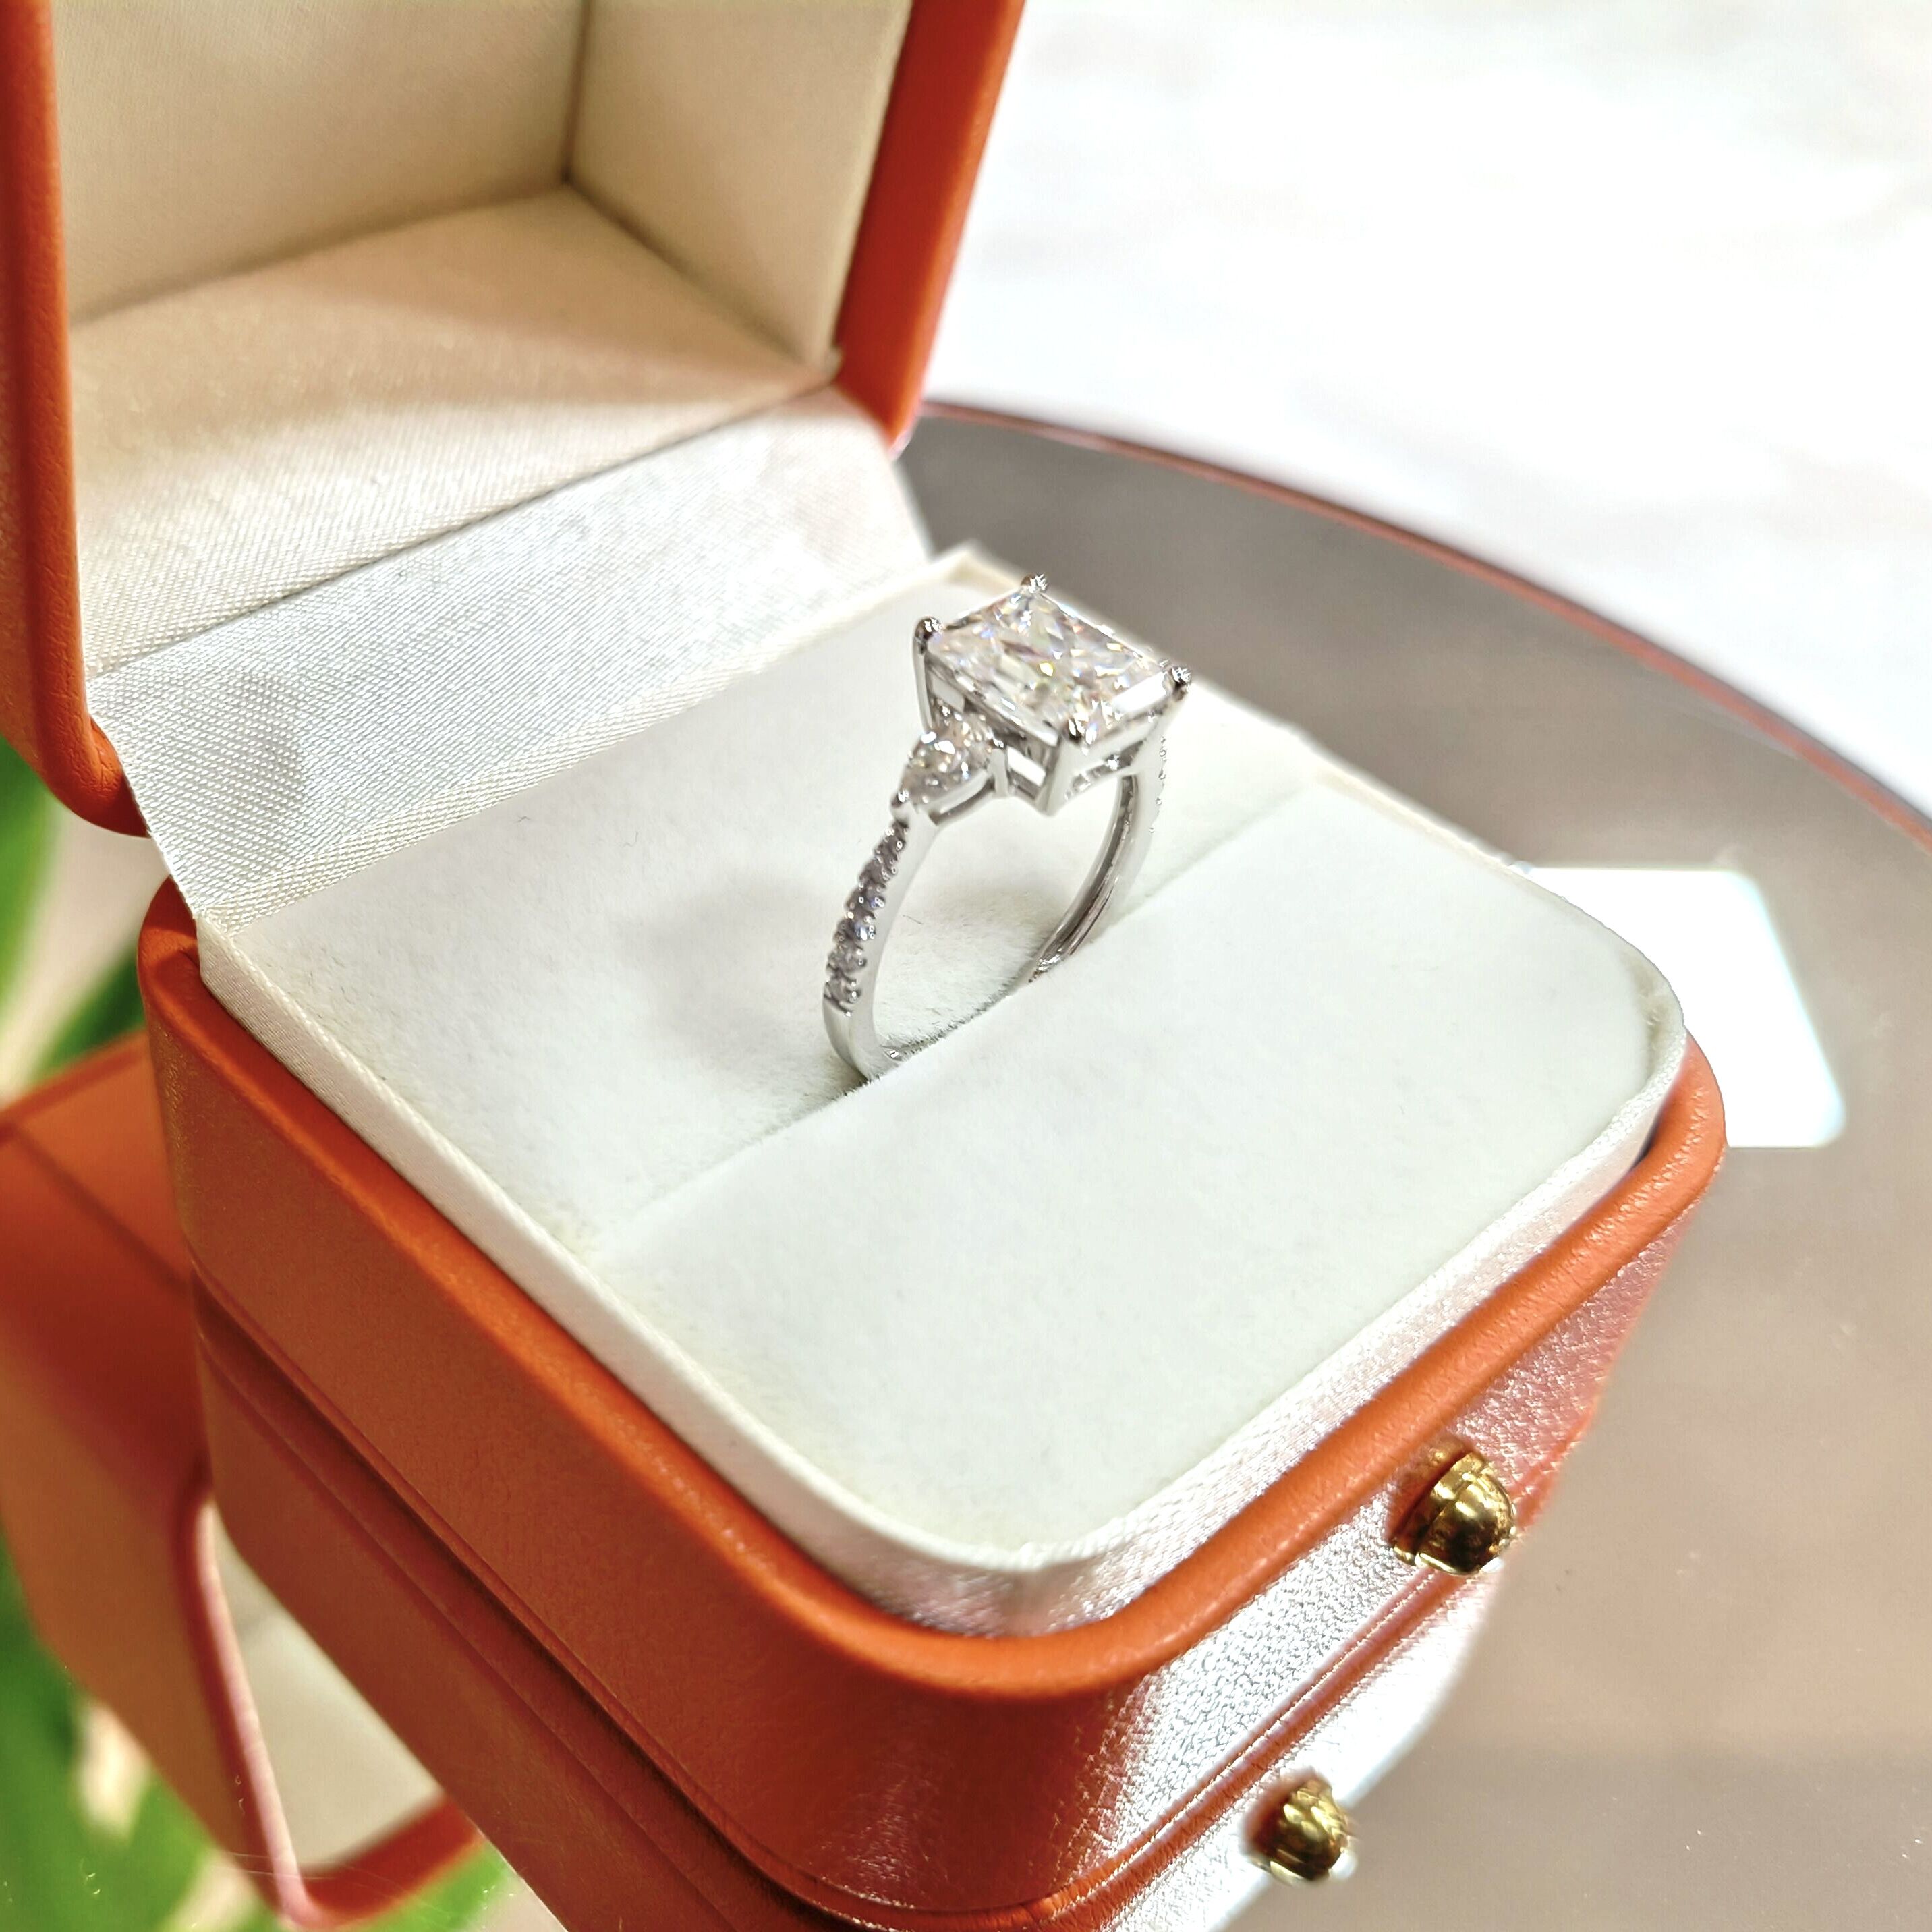 High Quality 3ct DEF Moissanite 14k Gold Diamond Wedding Rings Emerald Cut Stone